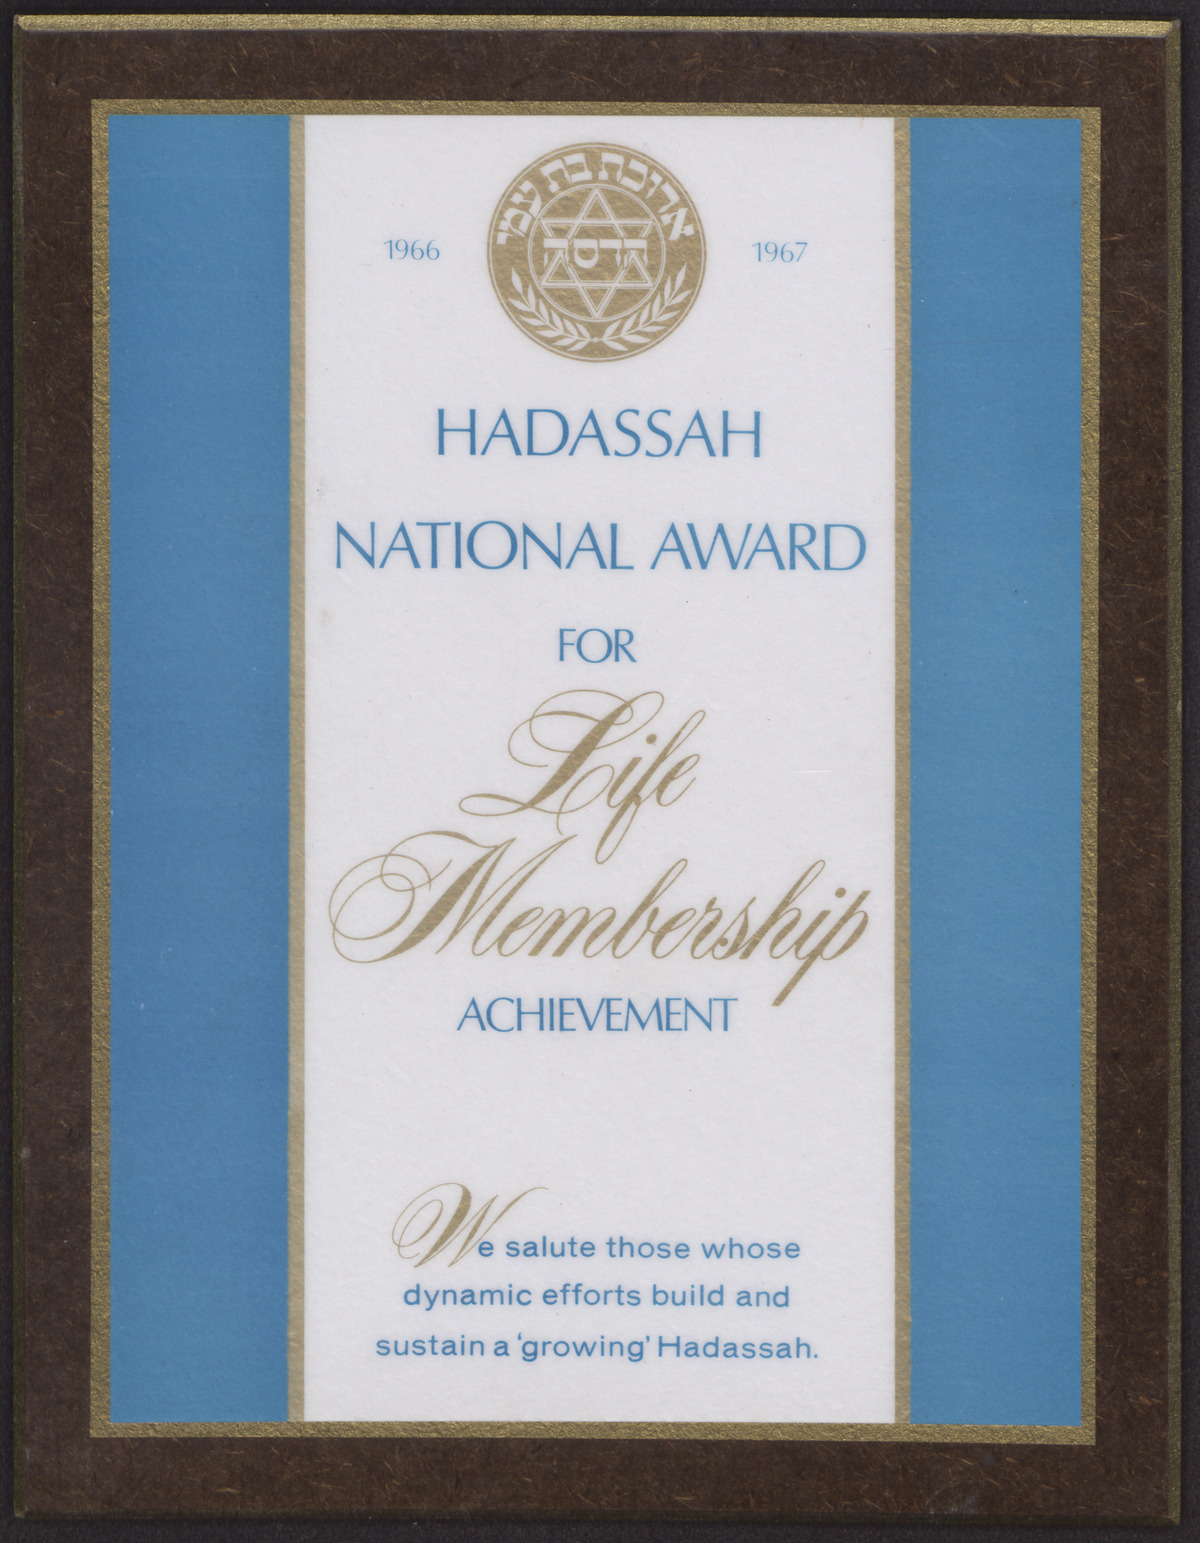 Hadassah National Award plaque recognizing Life Membership achievement, 1966-1967